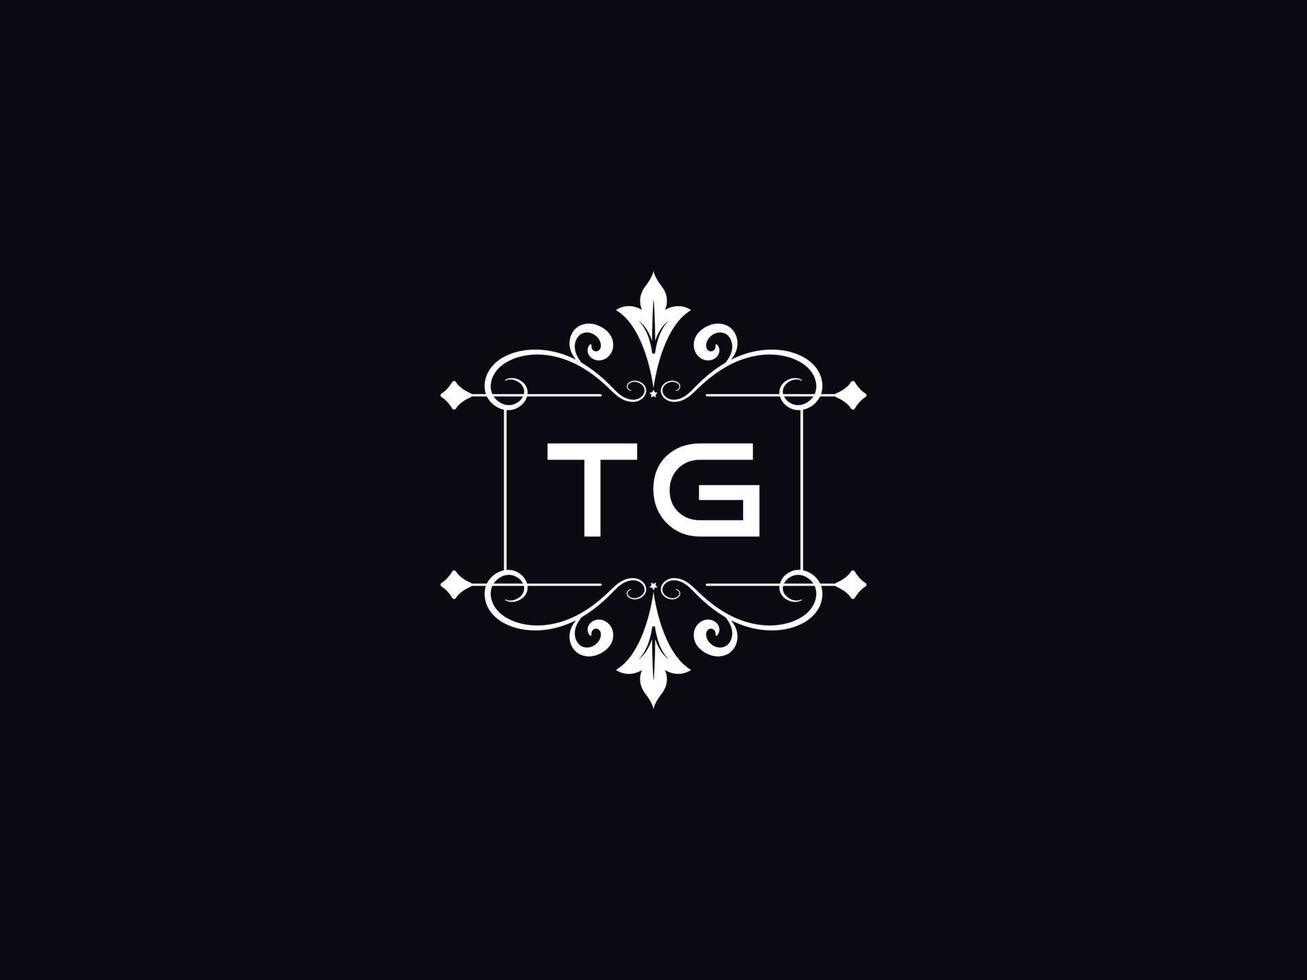 professionelles tg-logo, minimalistisches tg-luxus-logo-briefdesign vektor